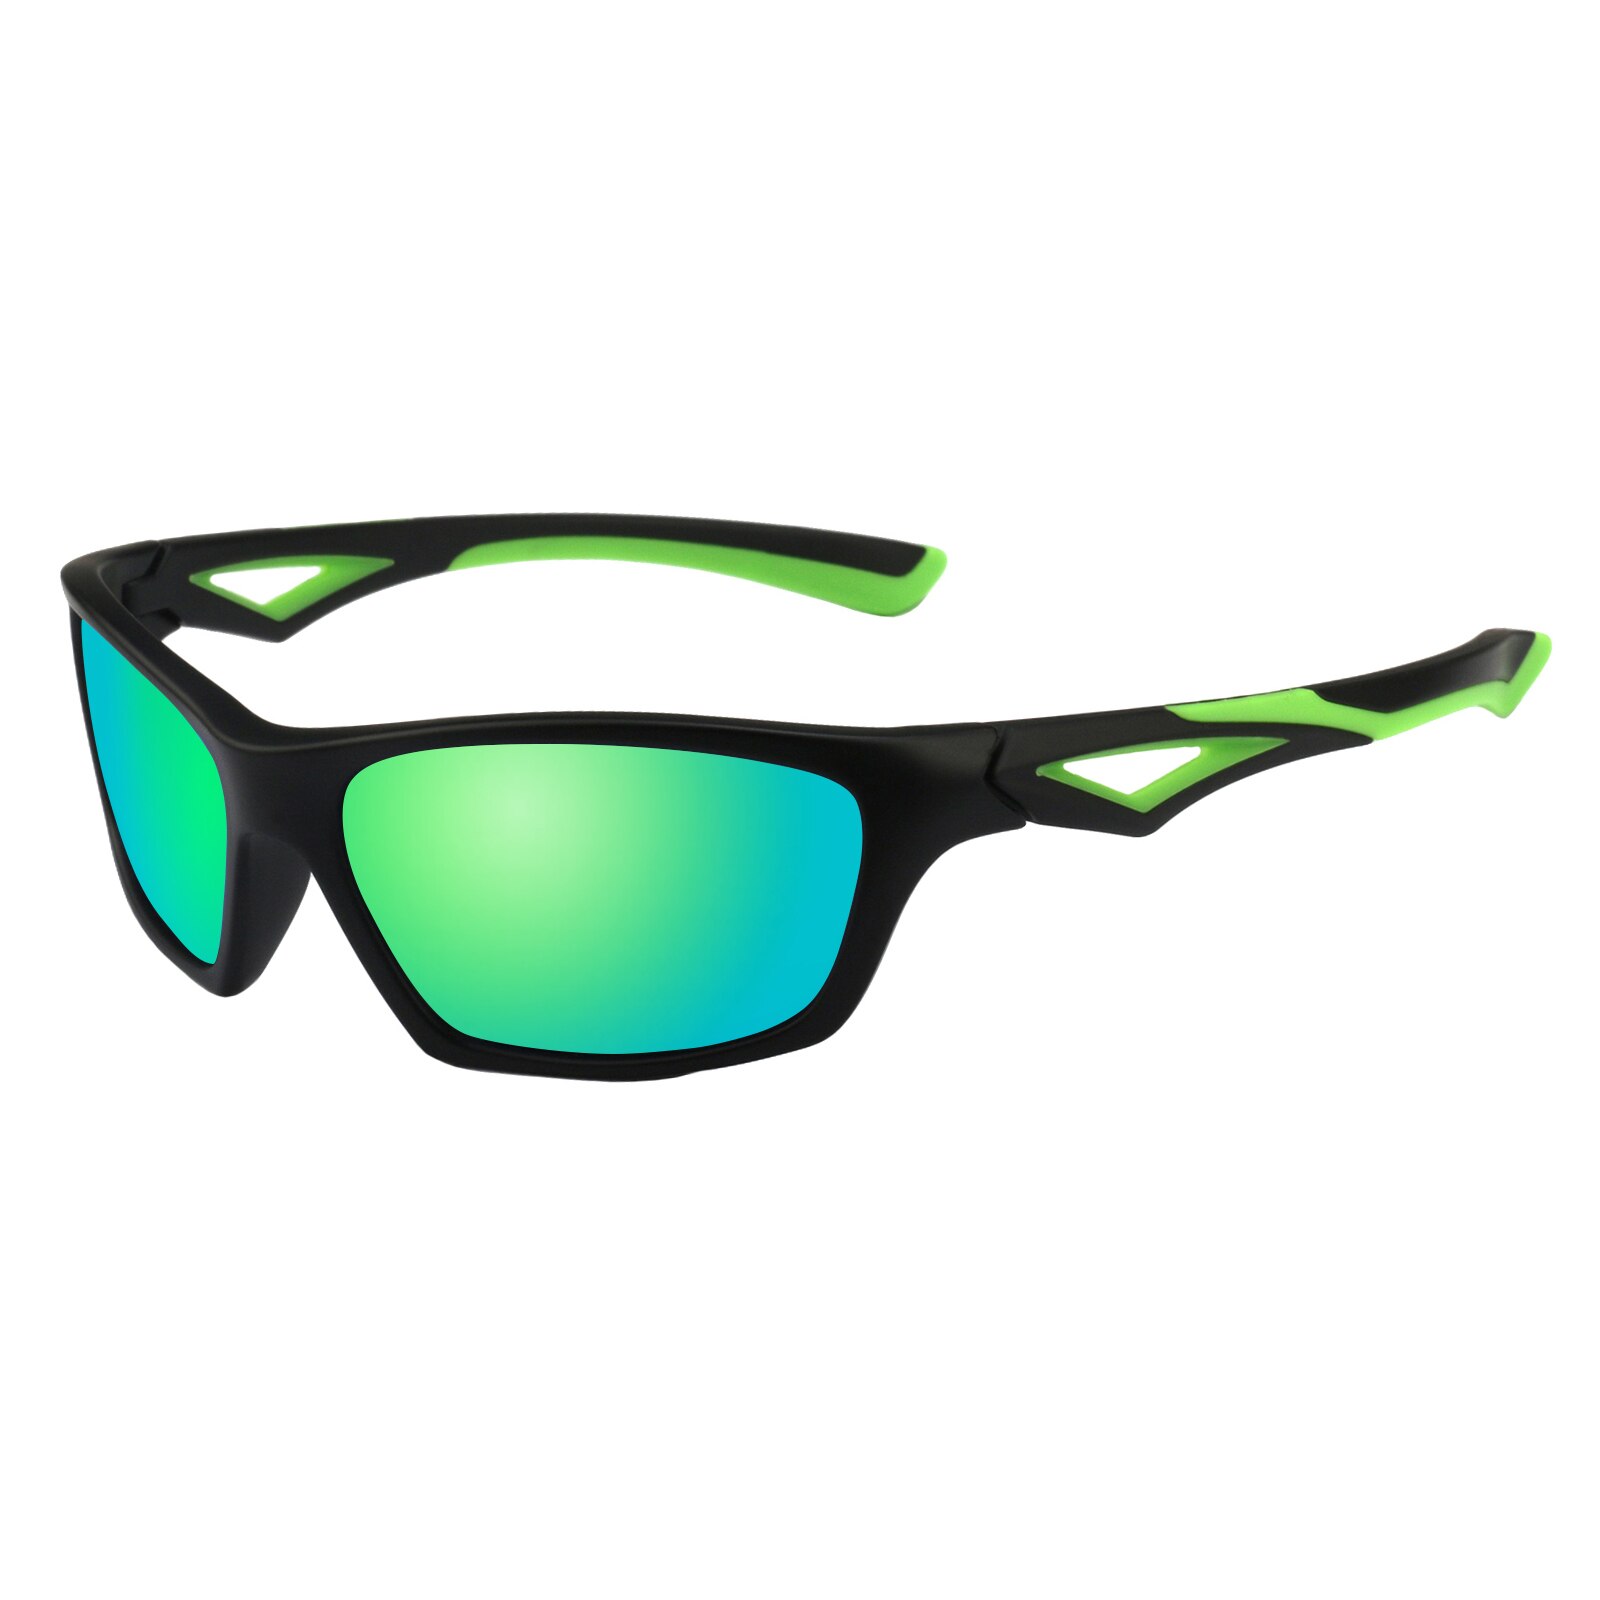 Kids Polarized Sunglasses TR90 Unbreakable Flexible Sport Glasses UV Protection for Boys Girls Age 3-10 Child Eyewear UV400